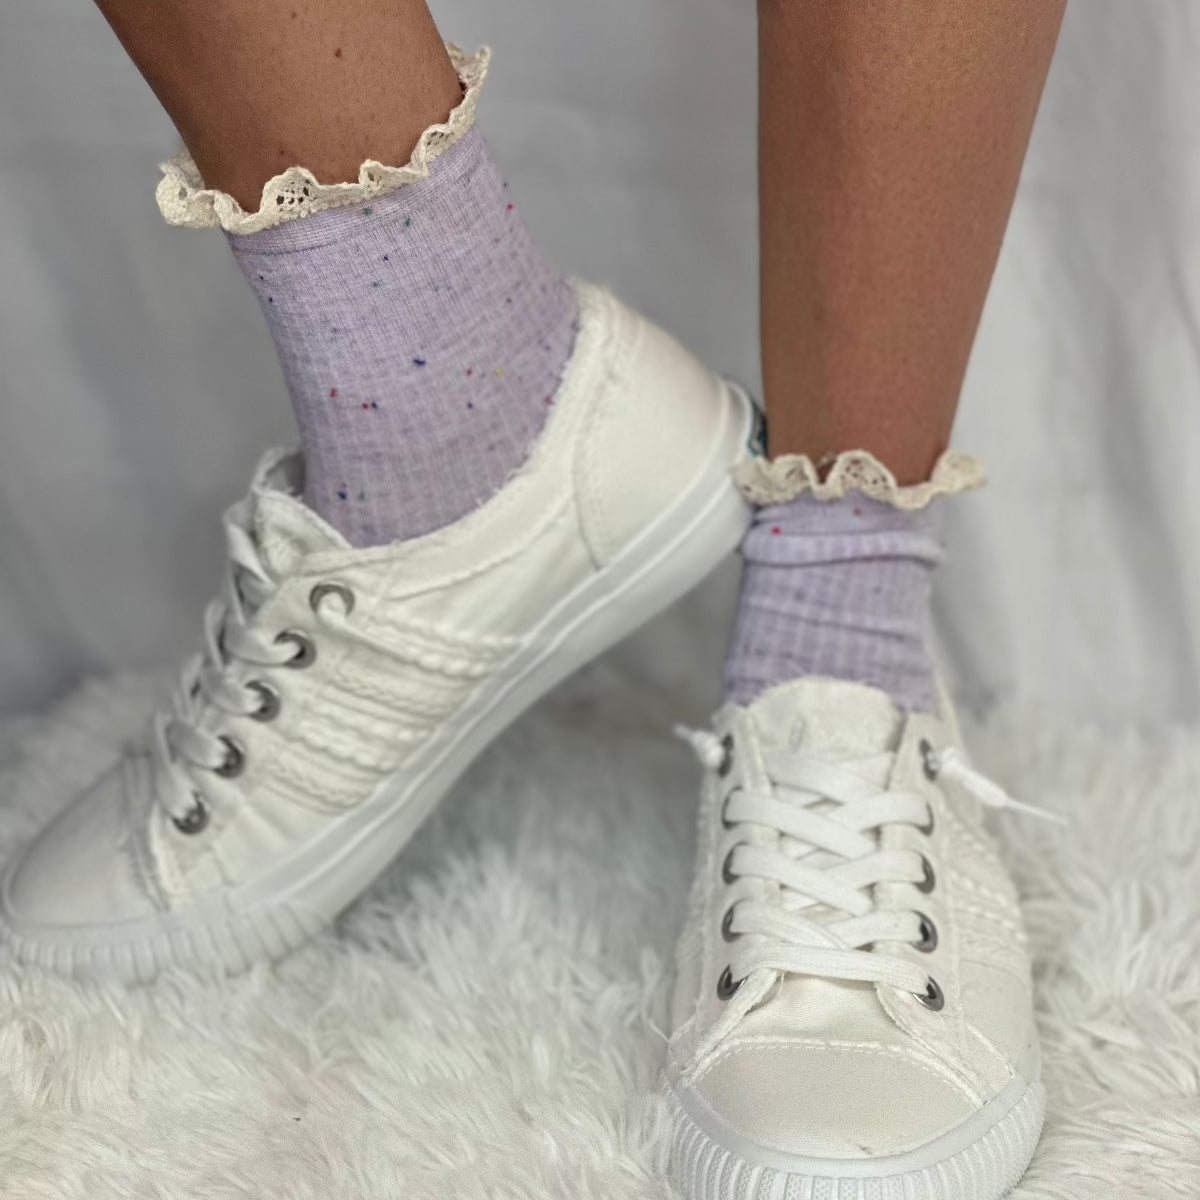 CONFETTI  lace topped ankle socks - lavender, cute summer lace topped sneaker socks women